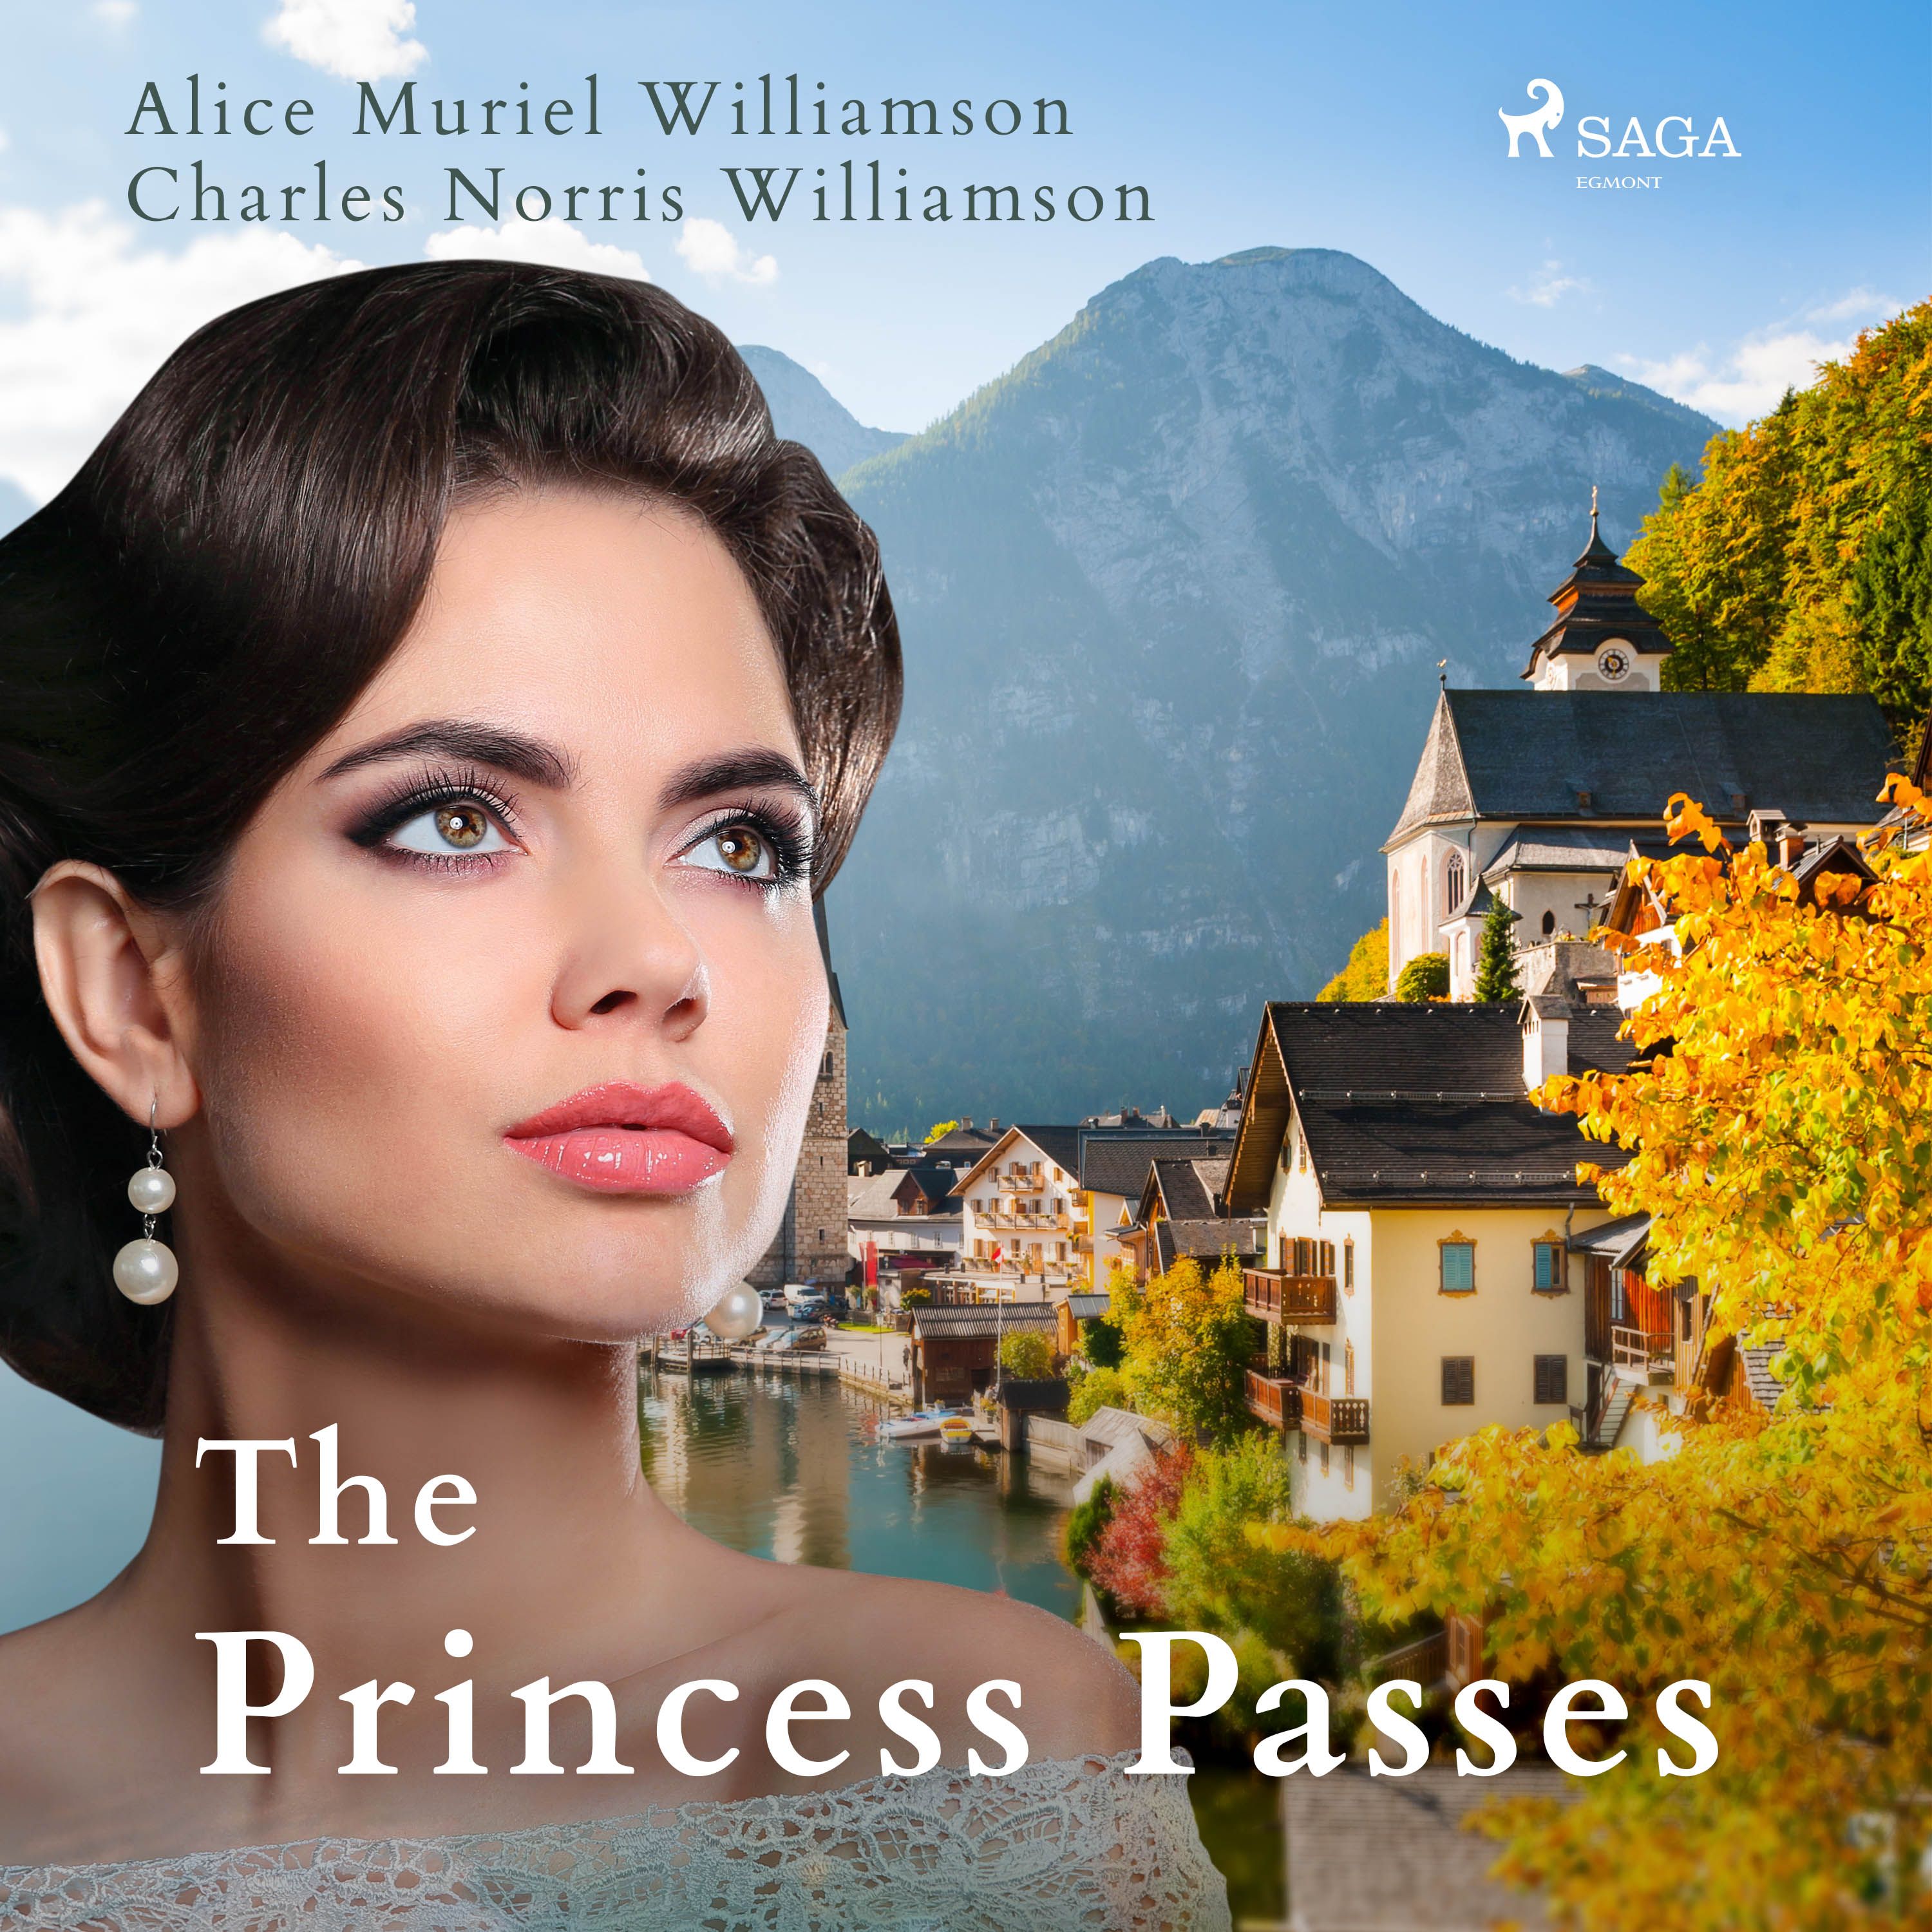 The Princess Passes, ljudbok av Alice Muriel Williamson, Charles Norris Williamson